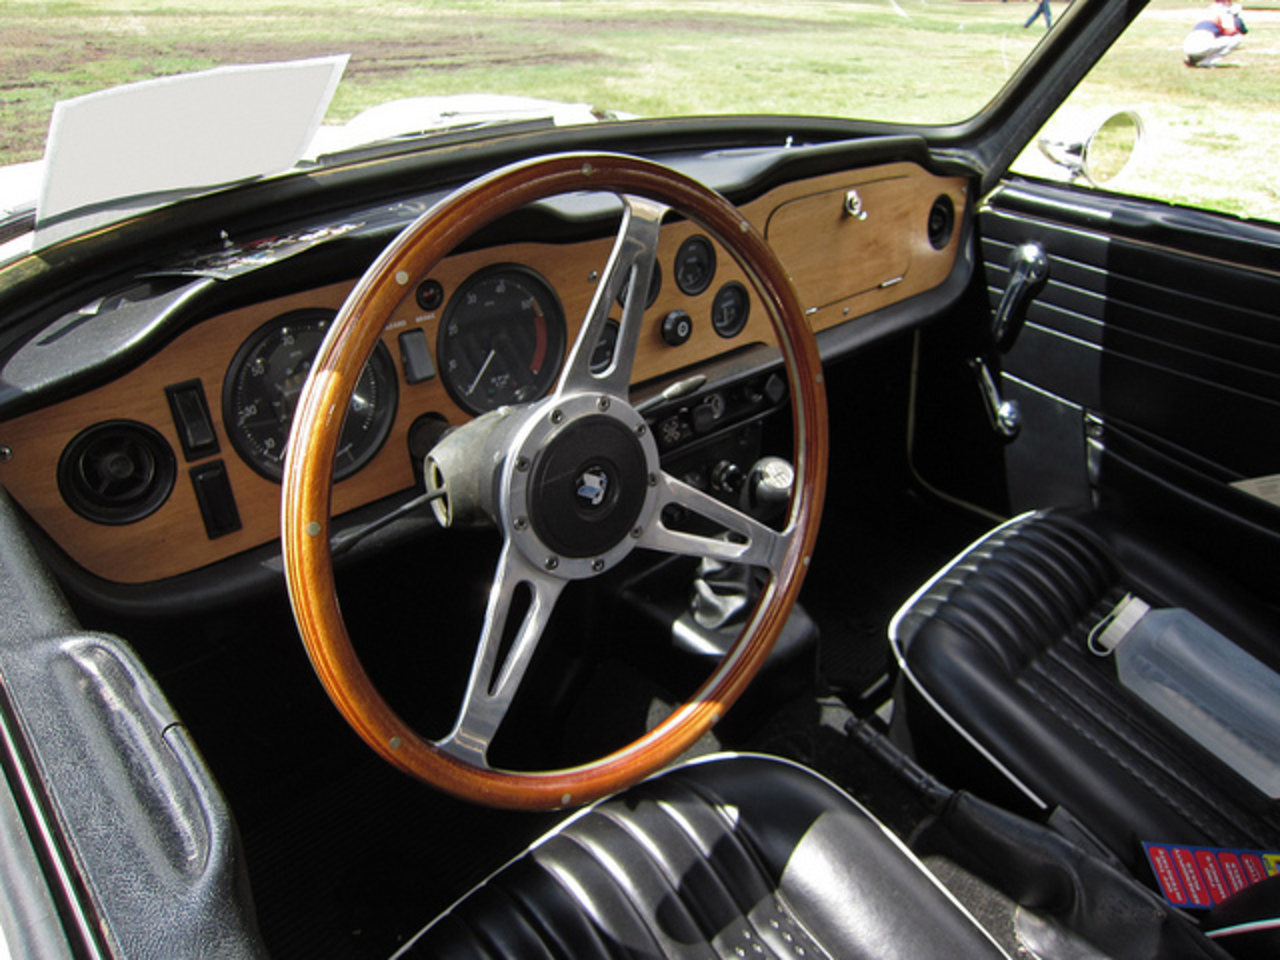 1968 Triumph TR250 dash 1 | Flickr - Photo Sharing!